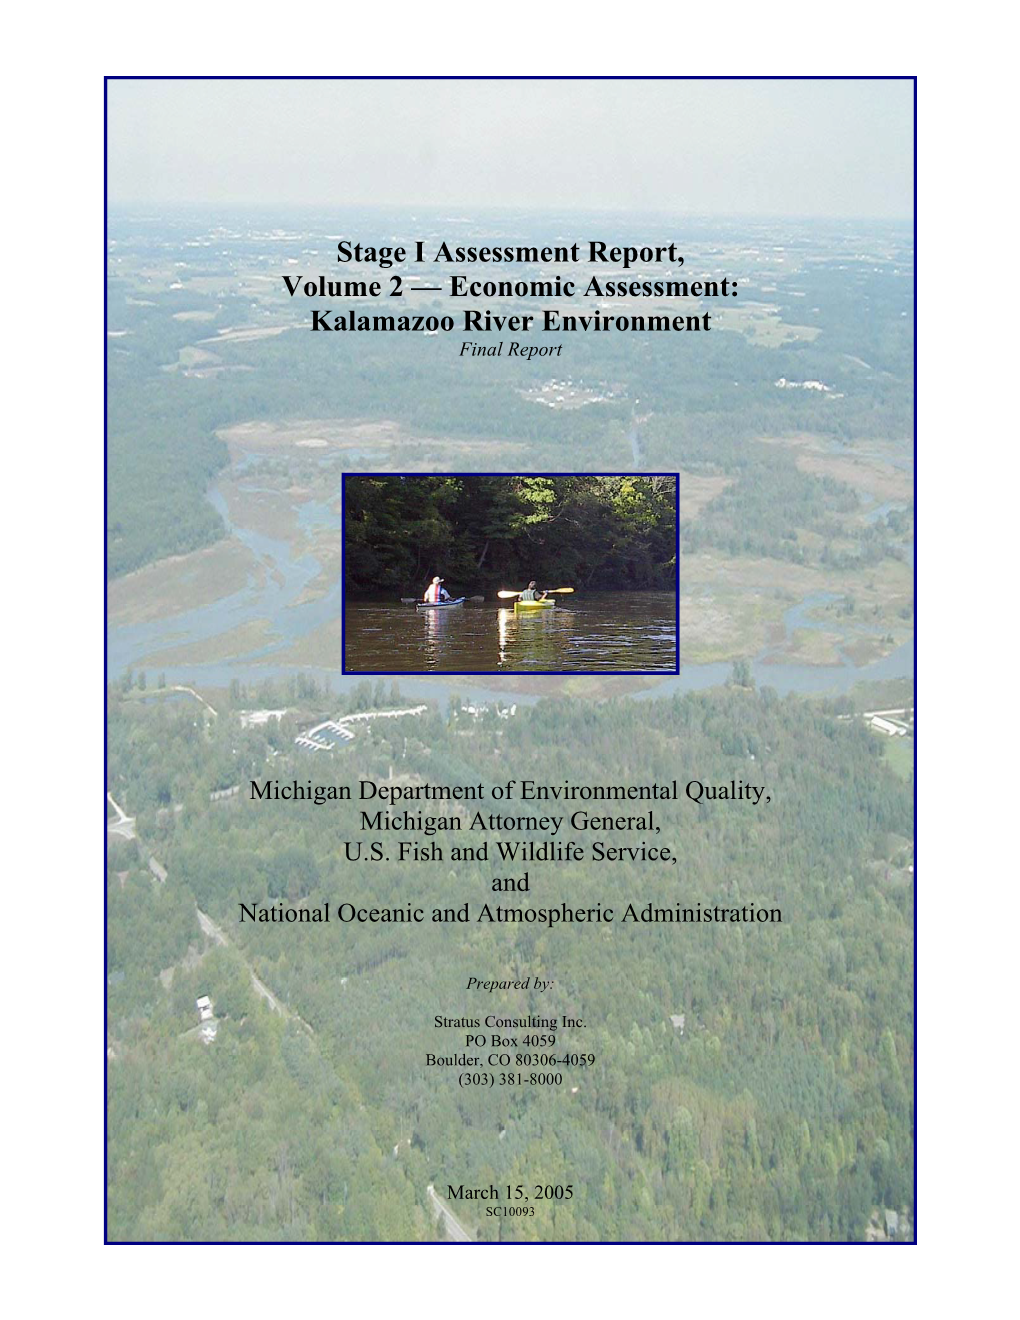 Kalamazoo River Environment Final Report